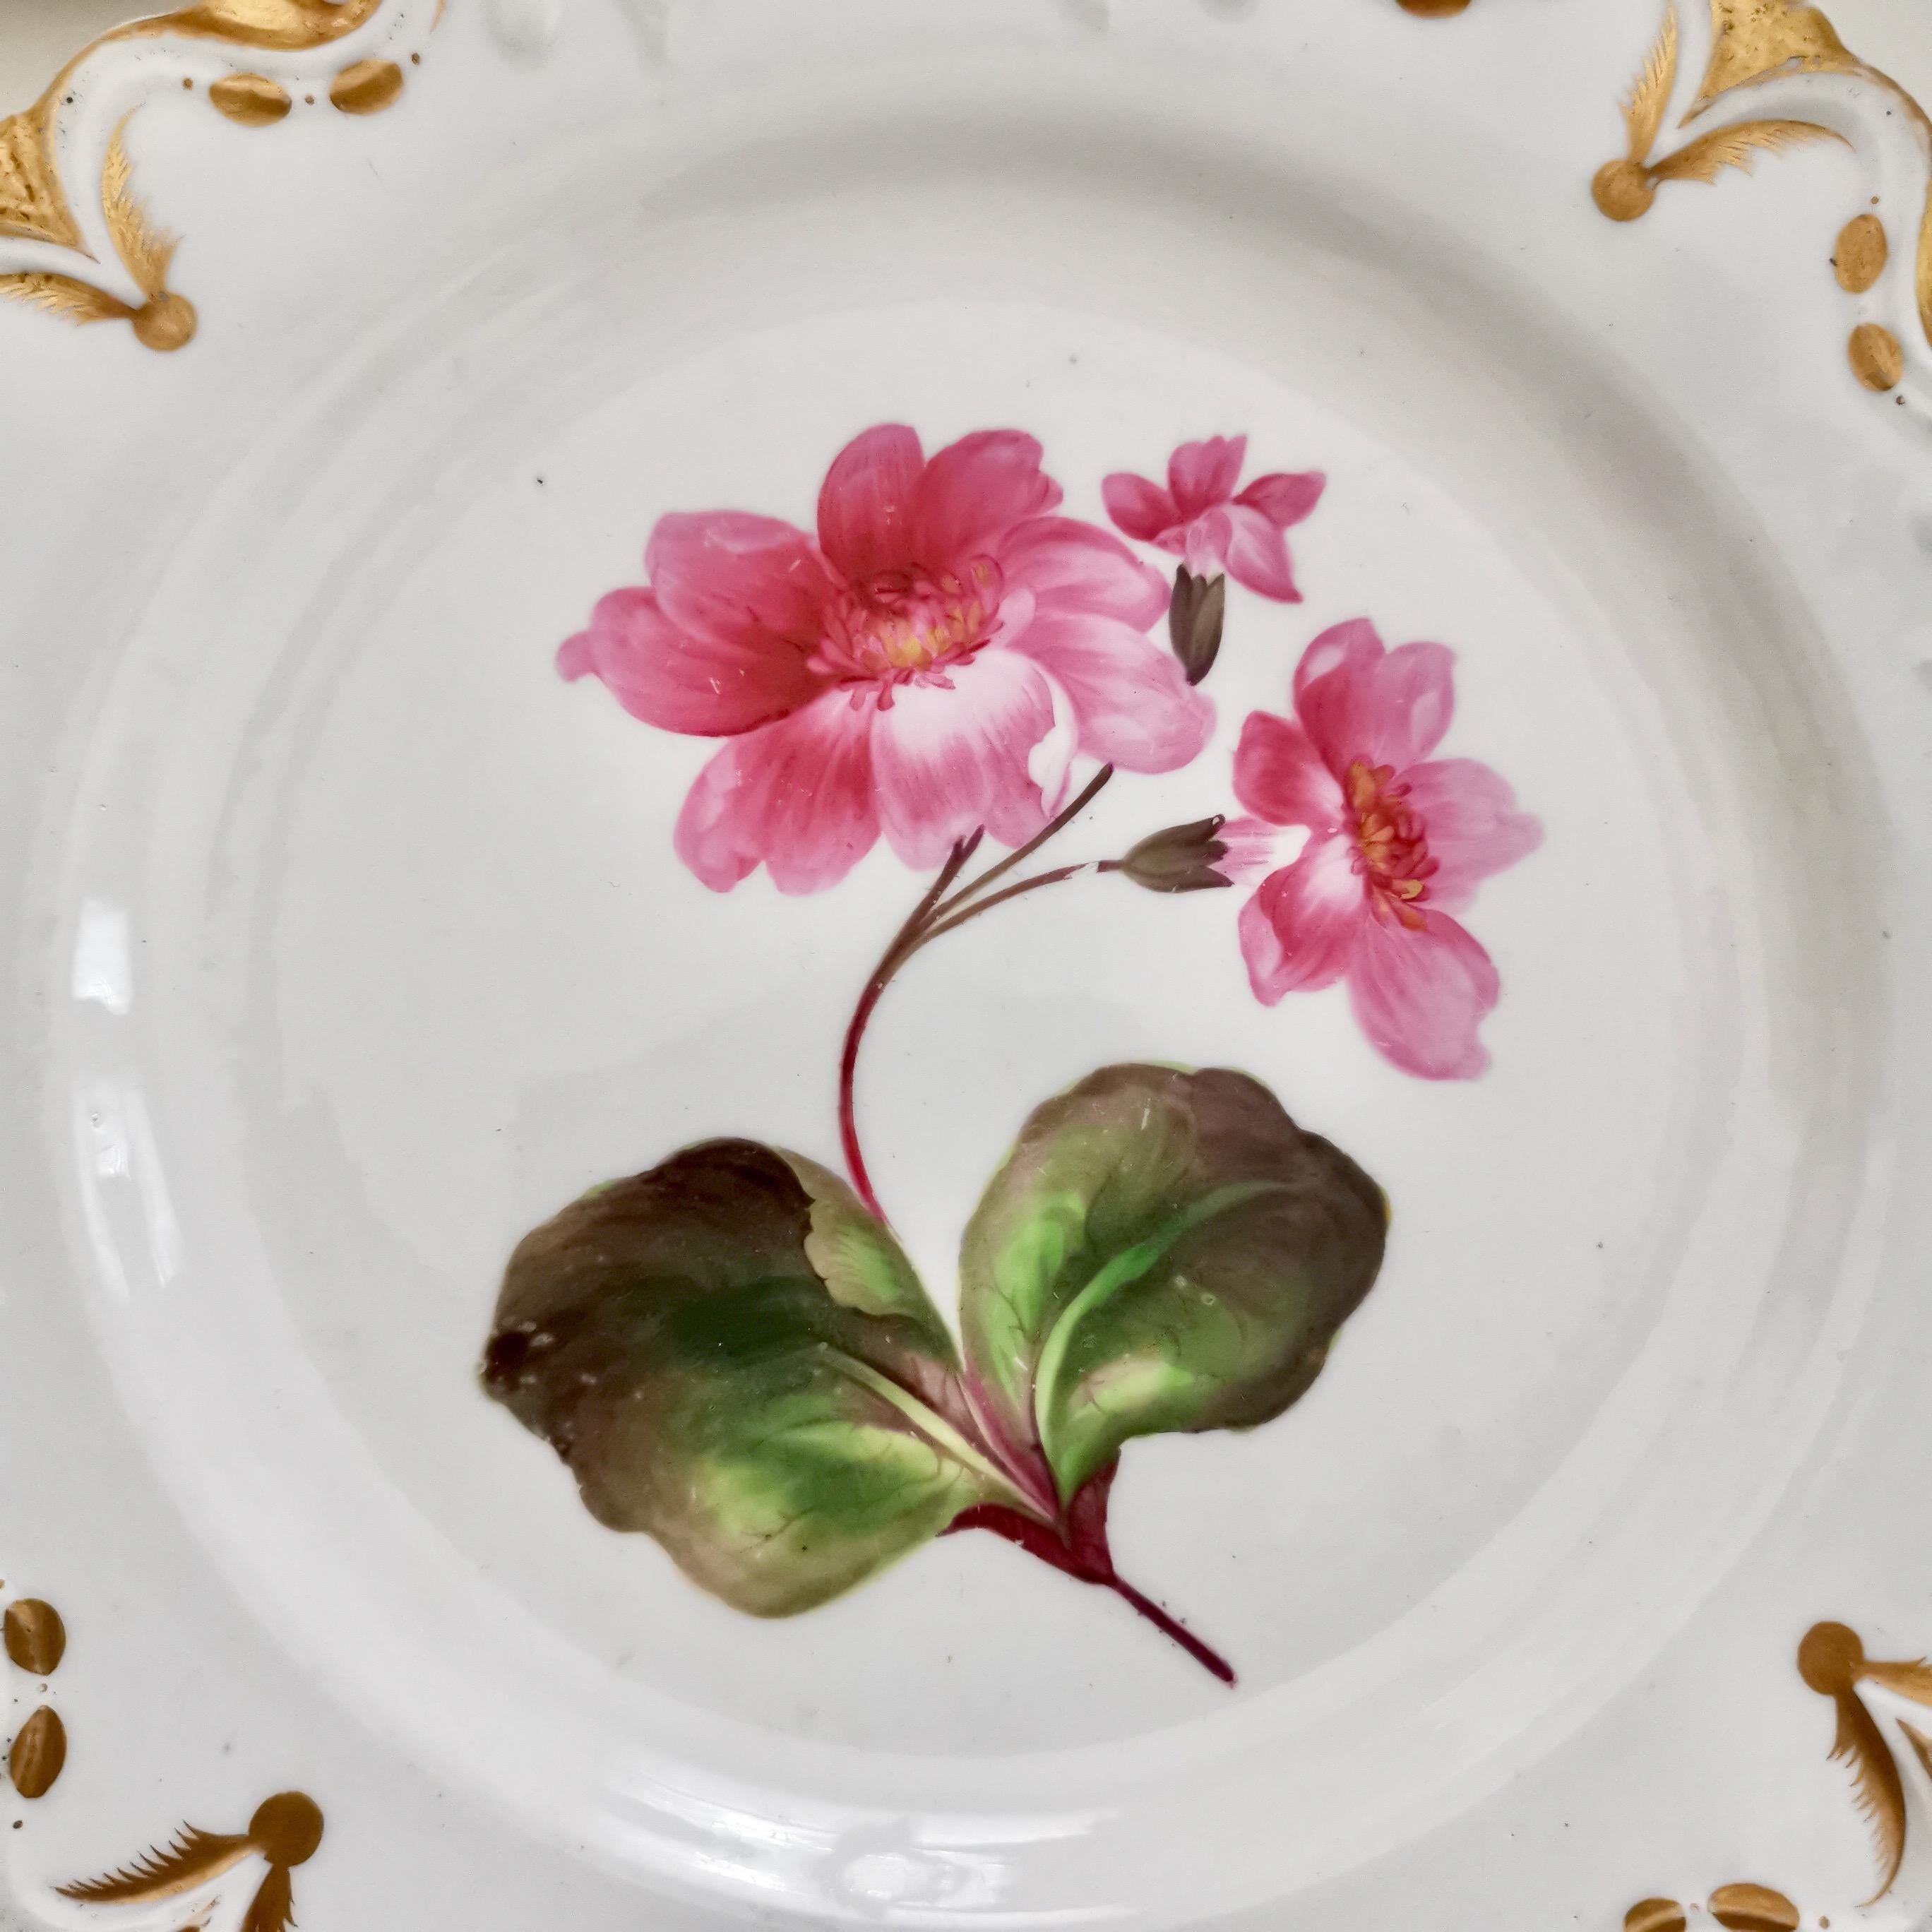 English Machin Porcelain Plate, White, Moustache Shape with Pink Flower, Regency